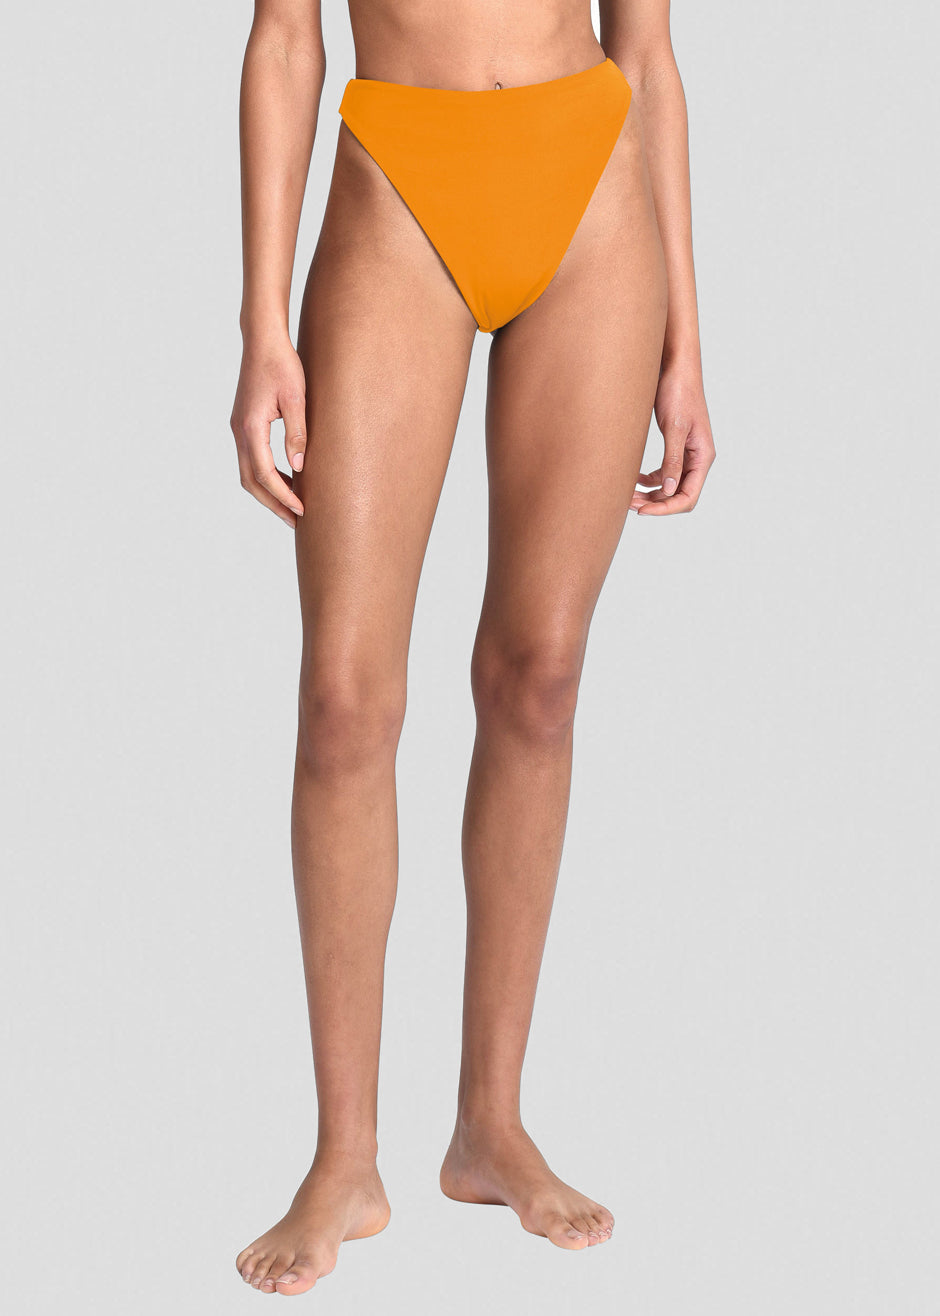 Aexae Triangle High Cut Swimsuit Bottoms - Orange - 1